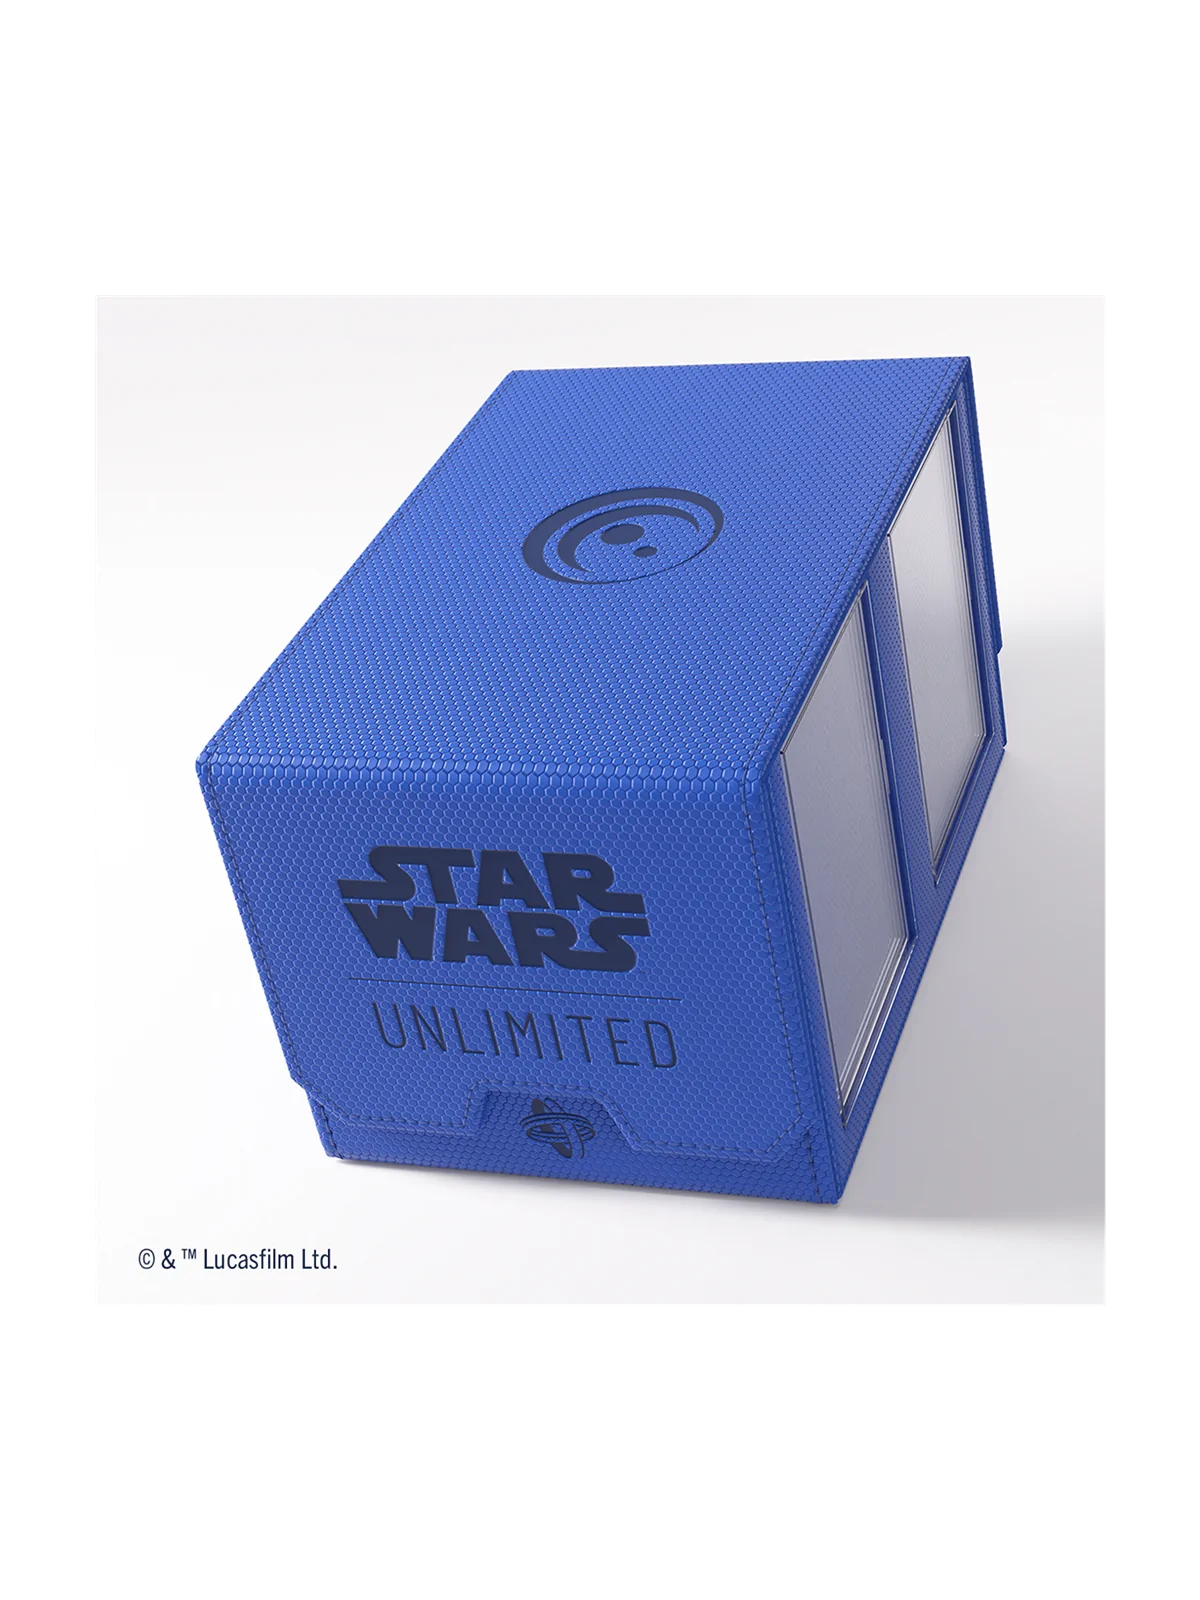 Comprar Star Wars: Unlimited Double Deck Pod Blue barato al mejor prec